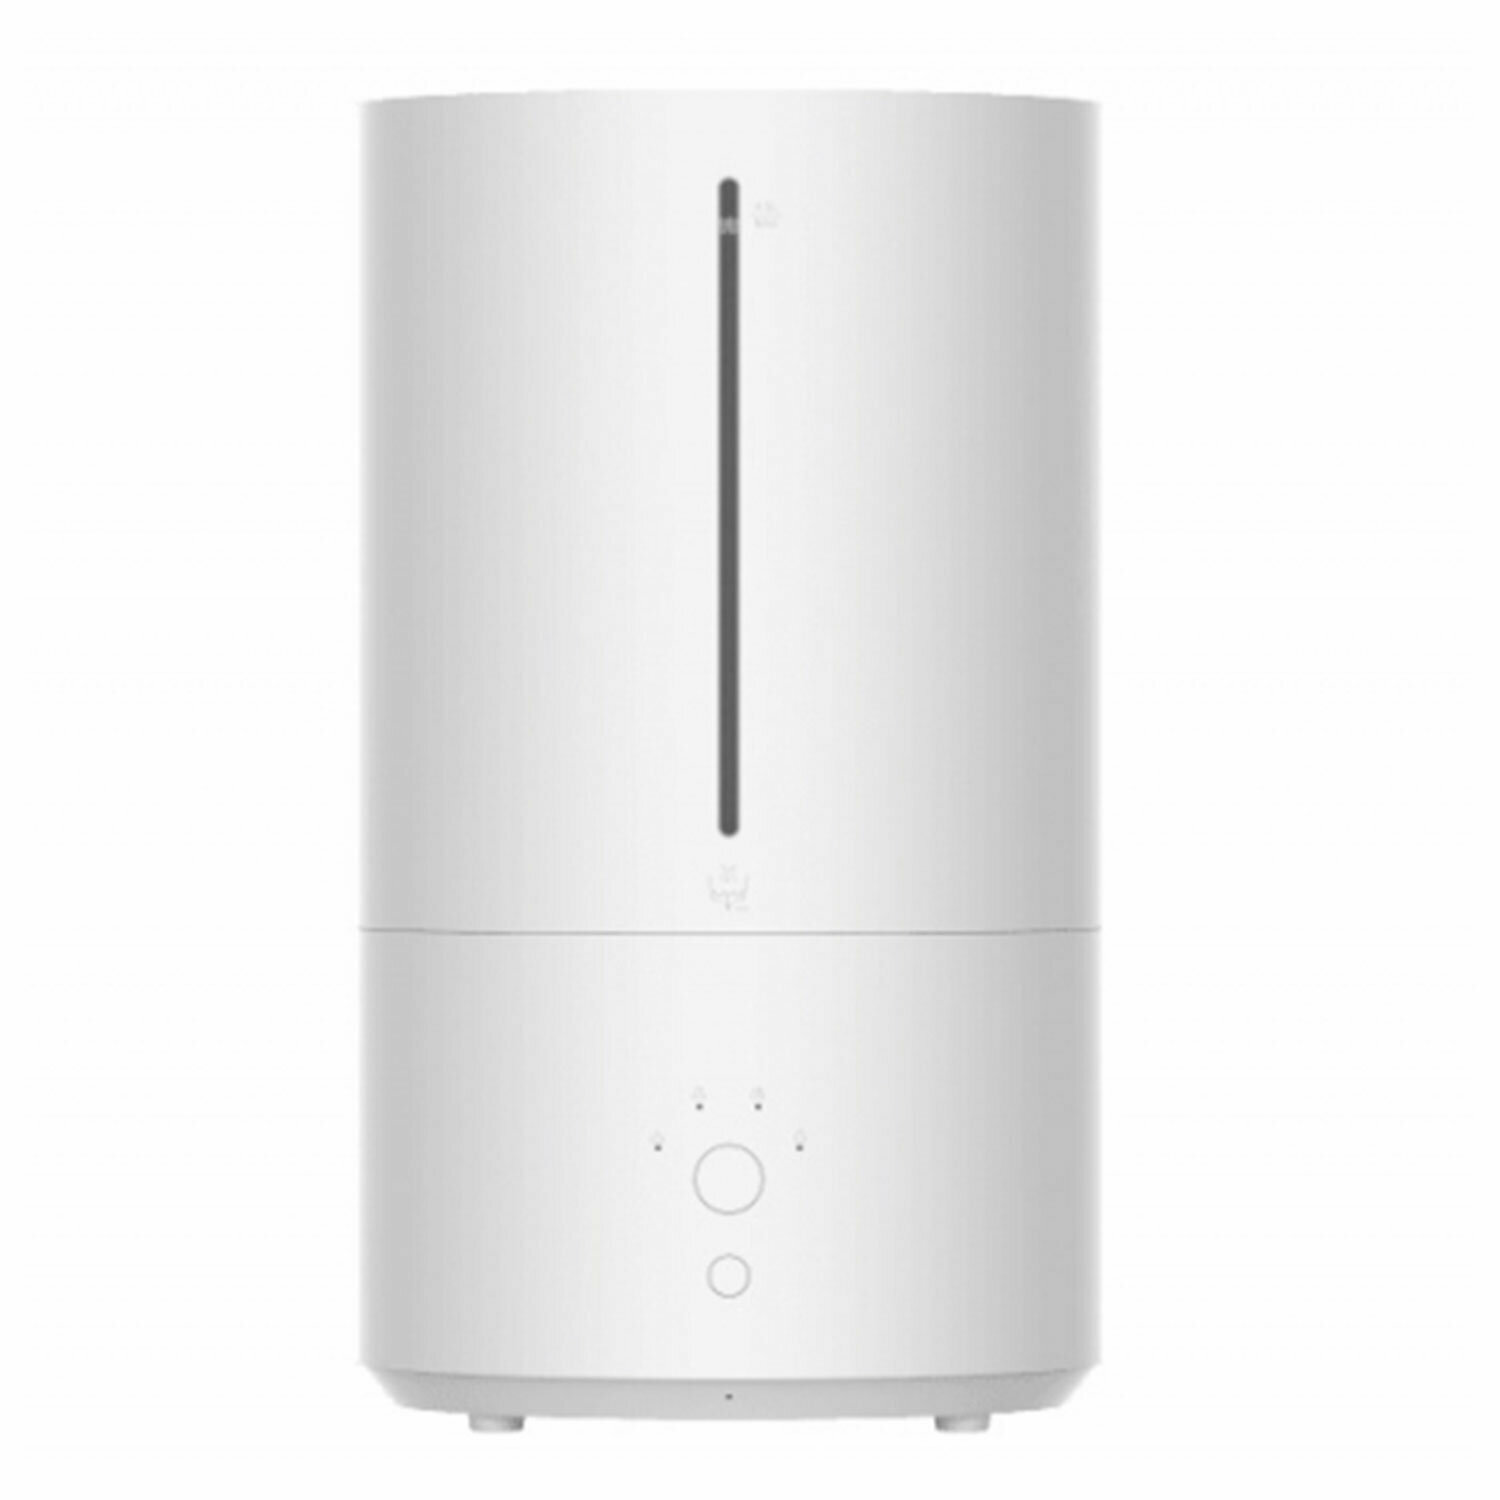 Увлажнитель воздуха XIAOMI Smart Humidifier 2, объем бака 4,5 л, 28 Вт, арома-контейнер, белый /Квант продажи 1 ед./